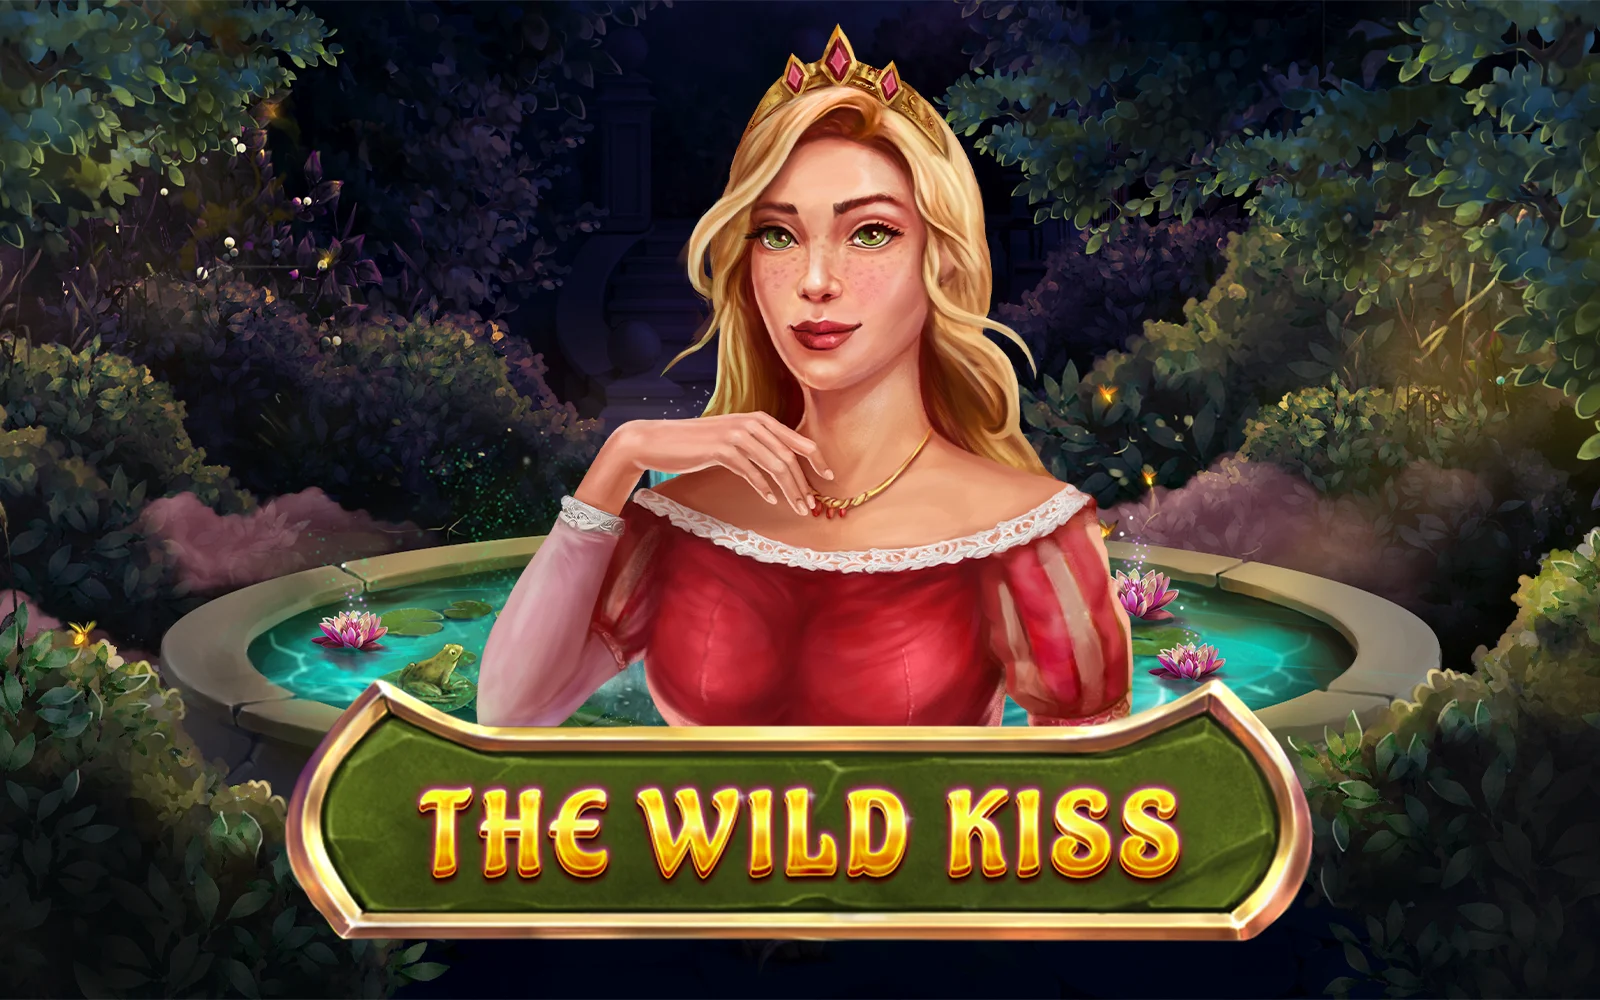 Juega a The Wild Kiss en el casino en línea de Starcasino.be